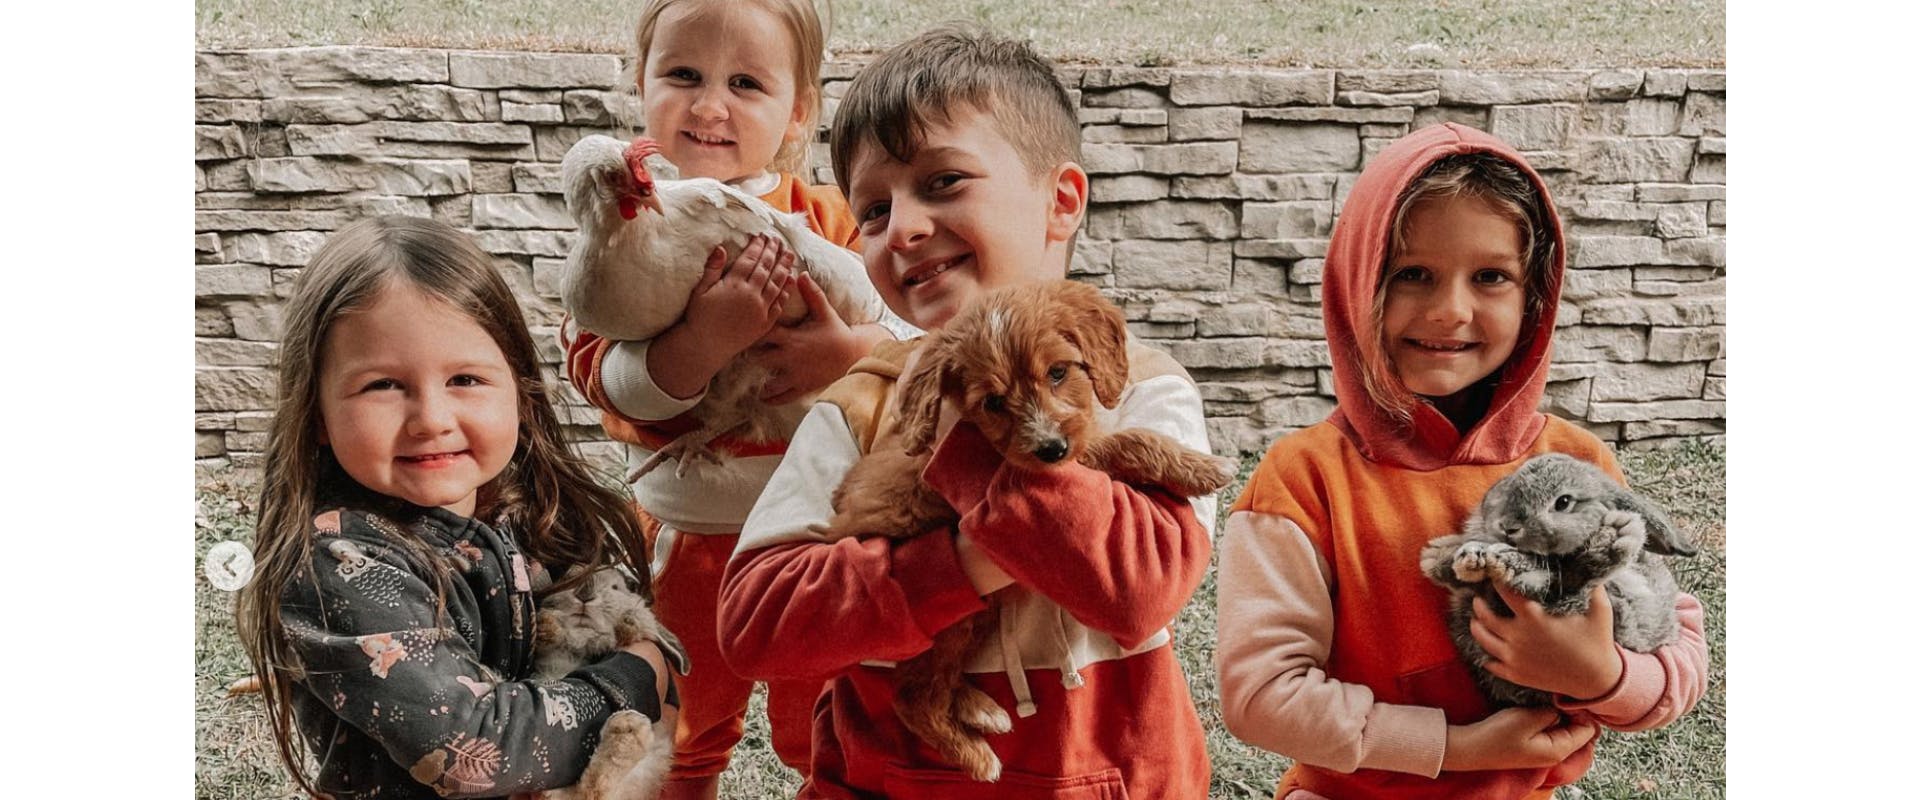 The children holding some animals.